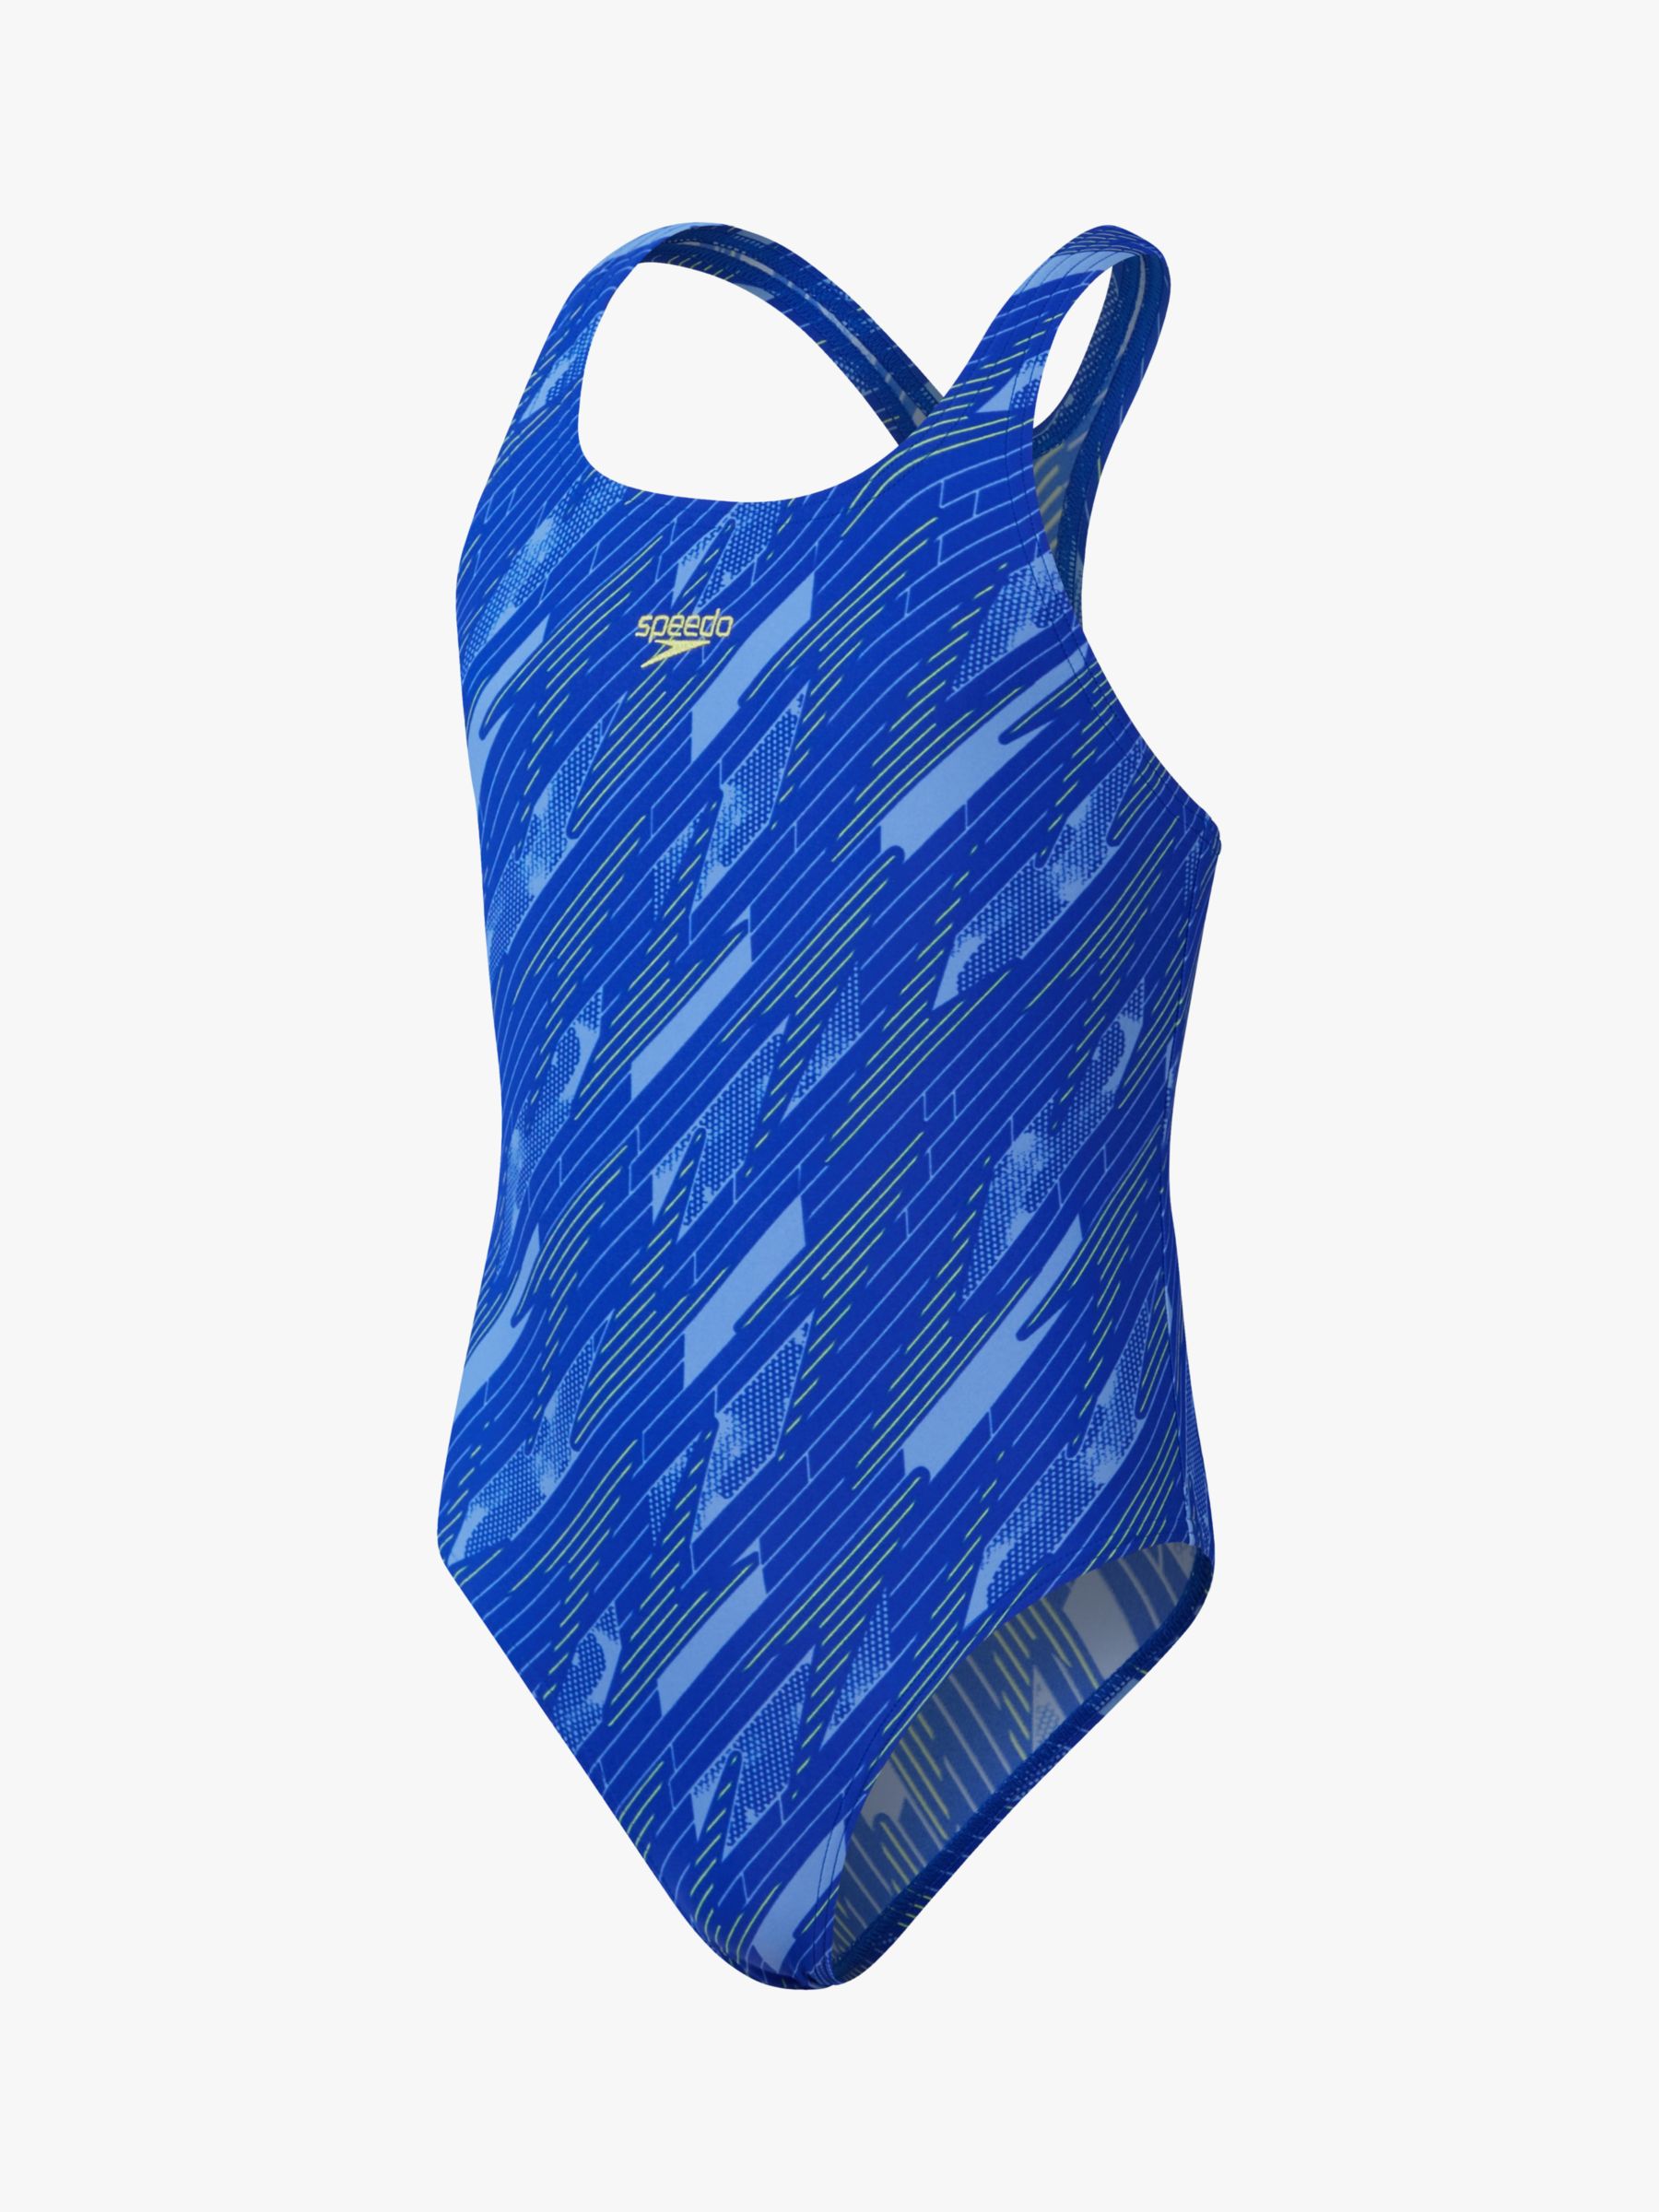 Speedo Kids' Hyperboom Graphic Medalist Swimsuit, Blue/Multi, 7-8 years